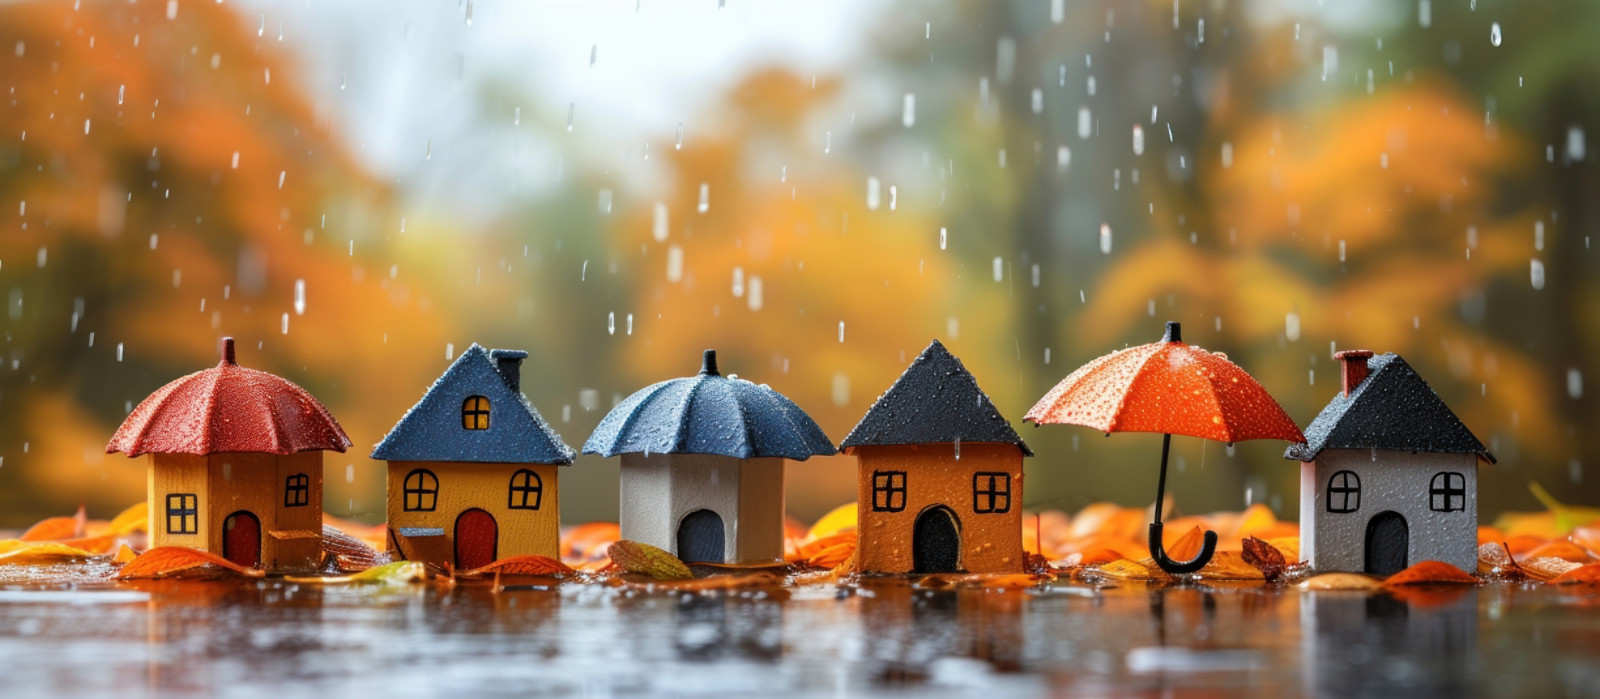 individuals holding small umbrellas and sample homes